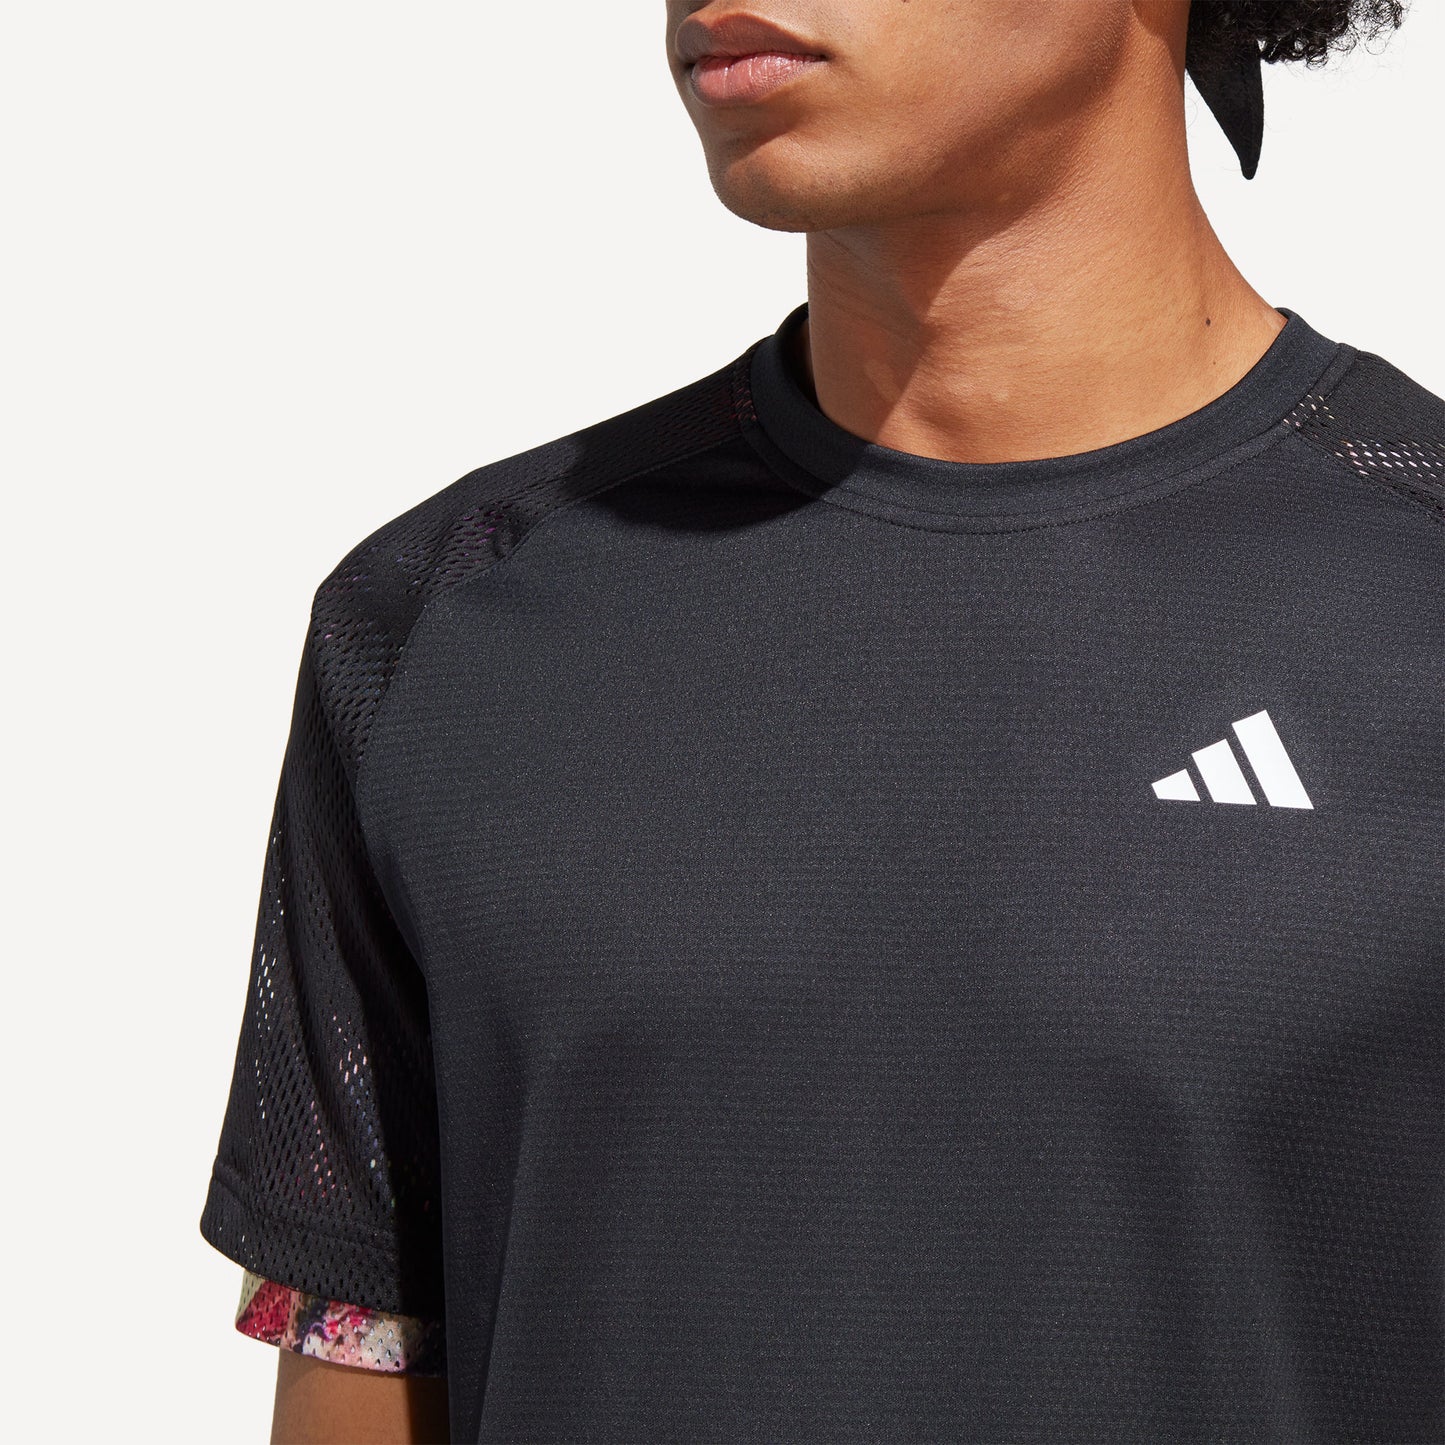 adidas Melbourne Ergo Heat Ready Men's Tennis Shirt Black (5)